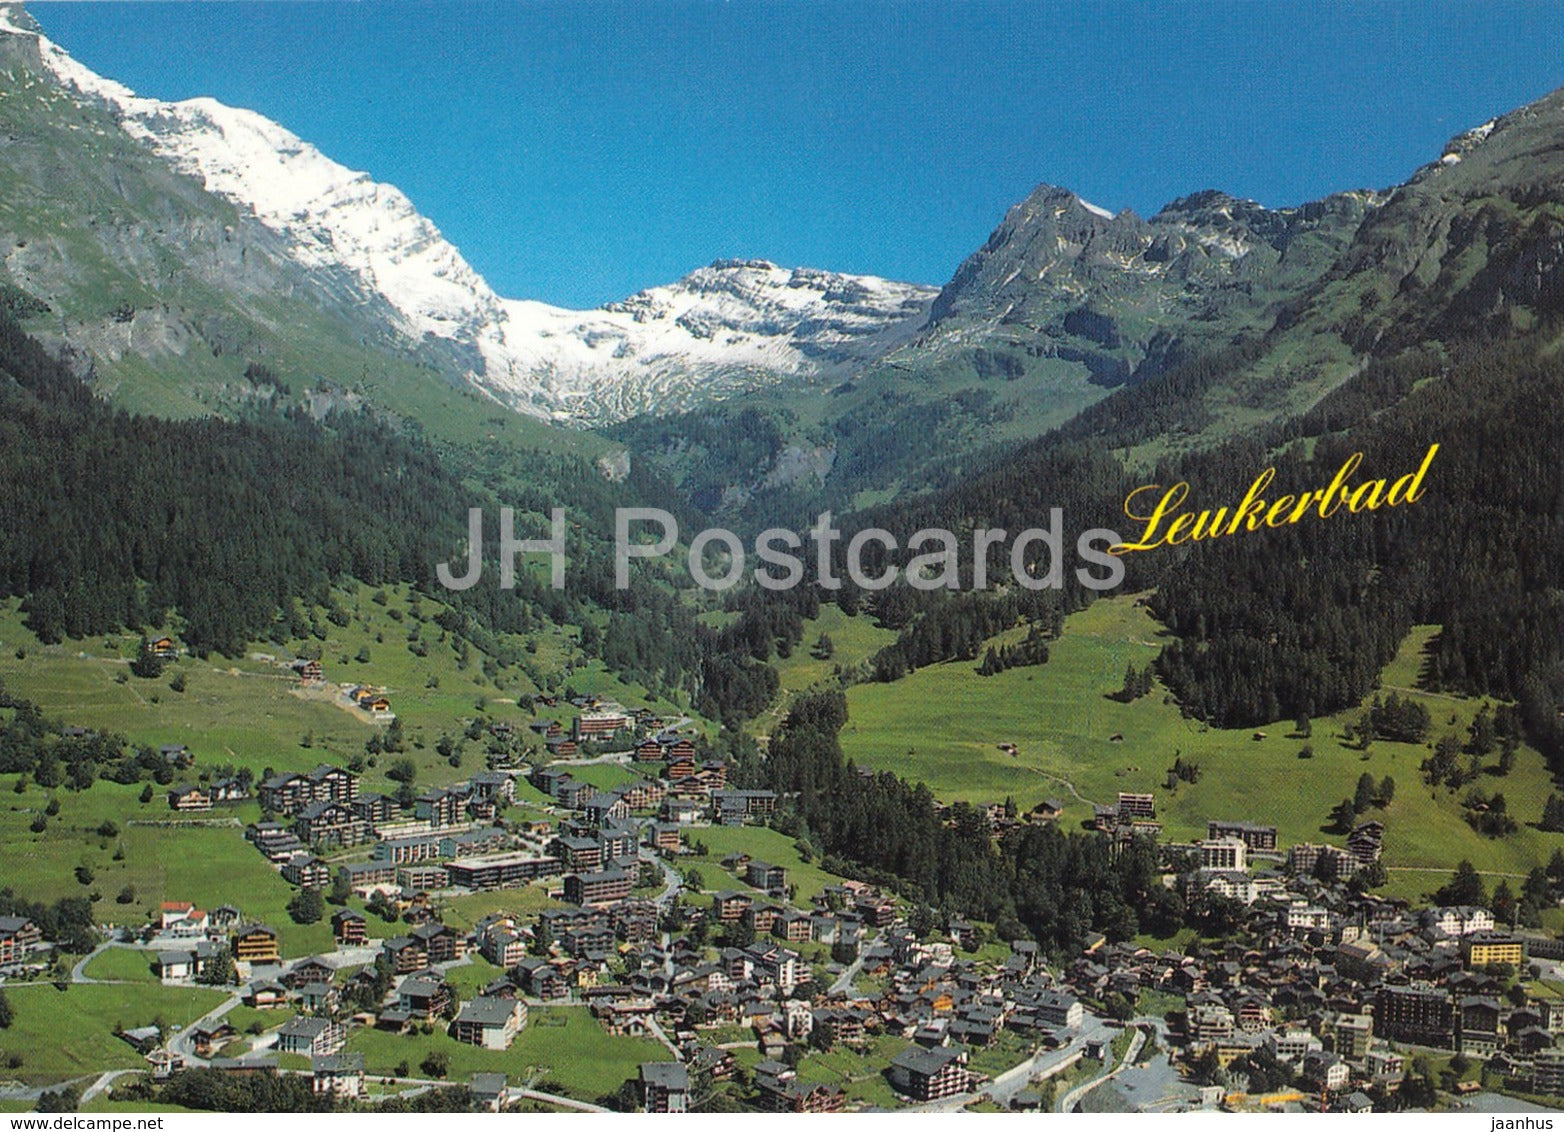 Leukerbad 1401 m - Loeche les Bains - Balmhorn - Gizzifurgge - Ferdenrothorn - 50715 - 1997 - Switzerland - used - JH Postcards